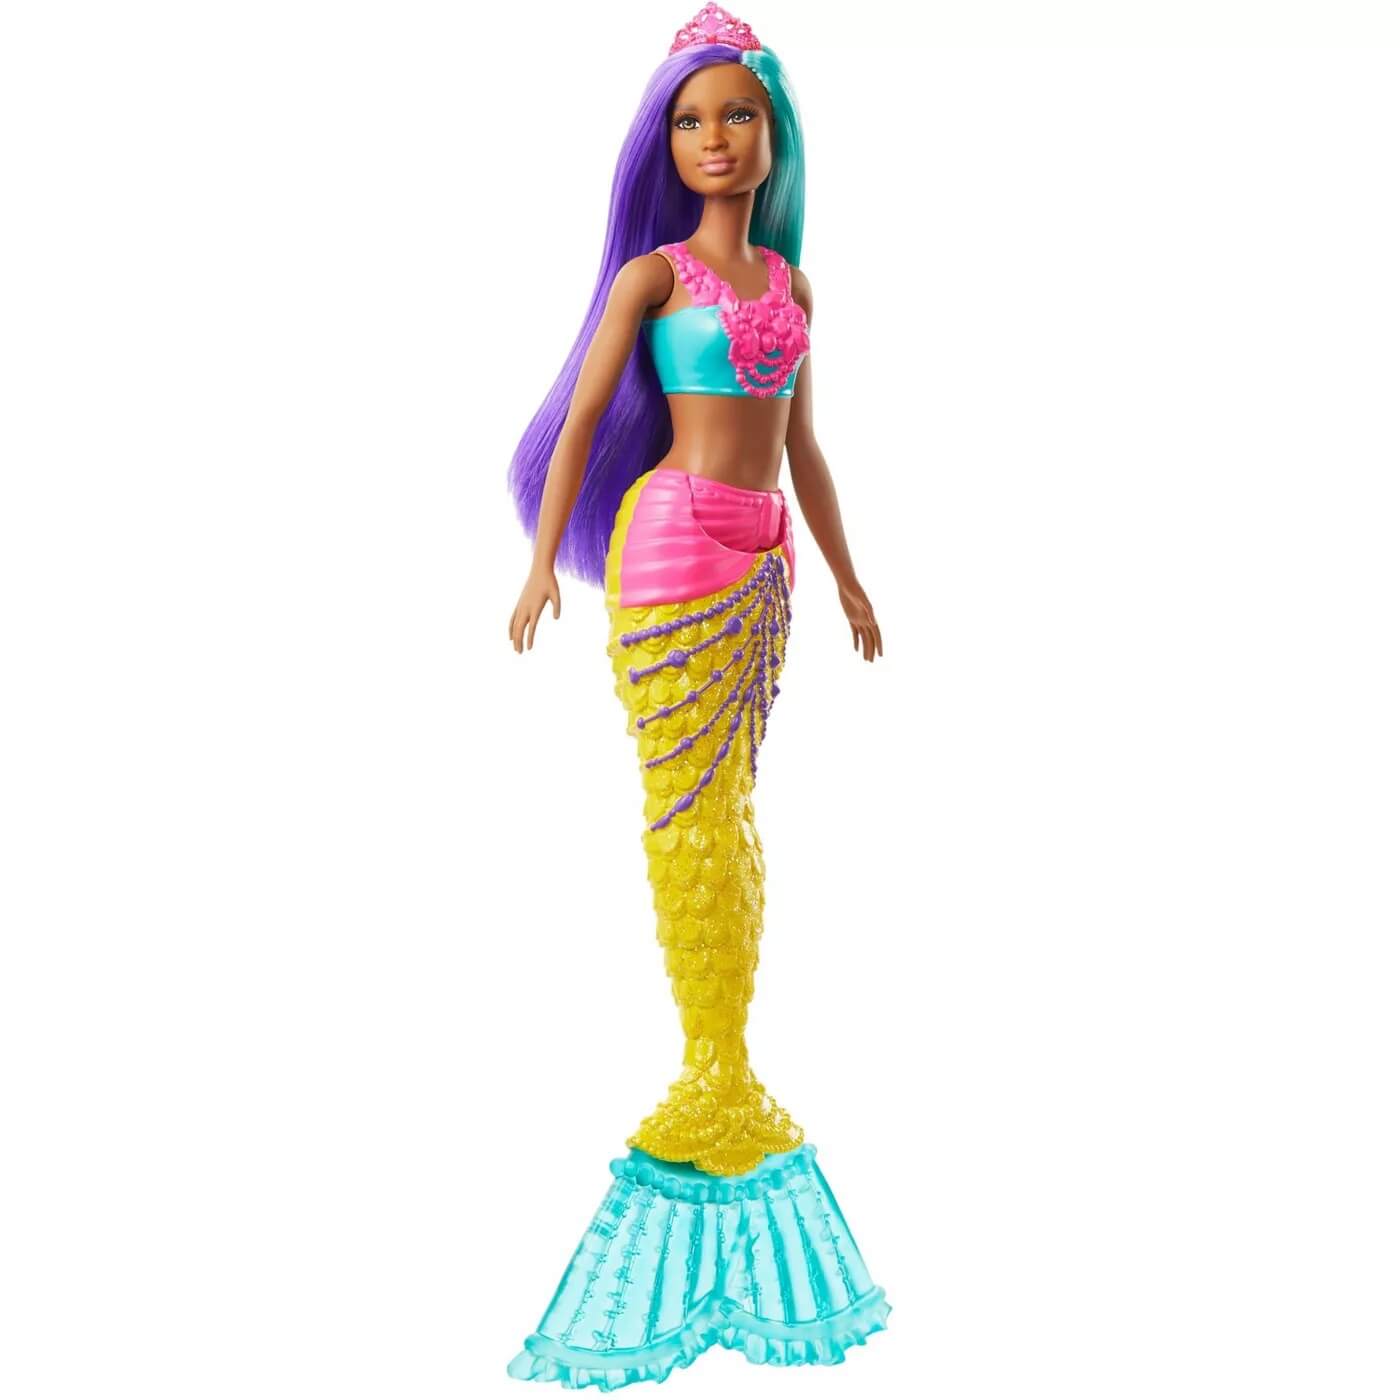 Barbie Dreamtopia Mermaid, Teal and Purple Hair Doll, 12 inches